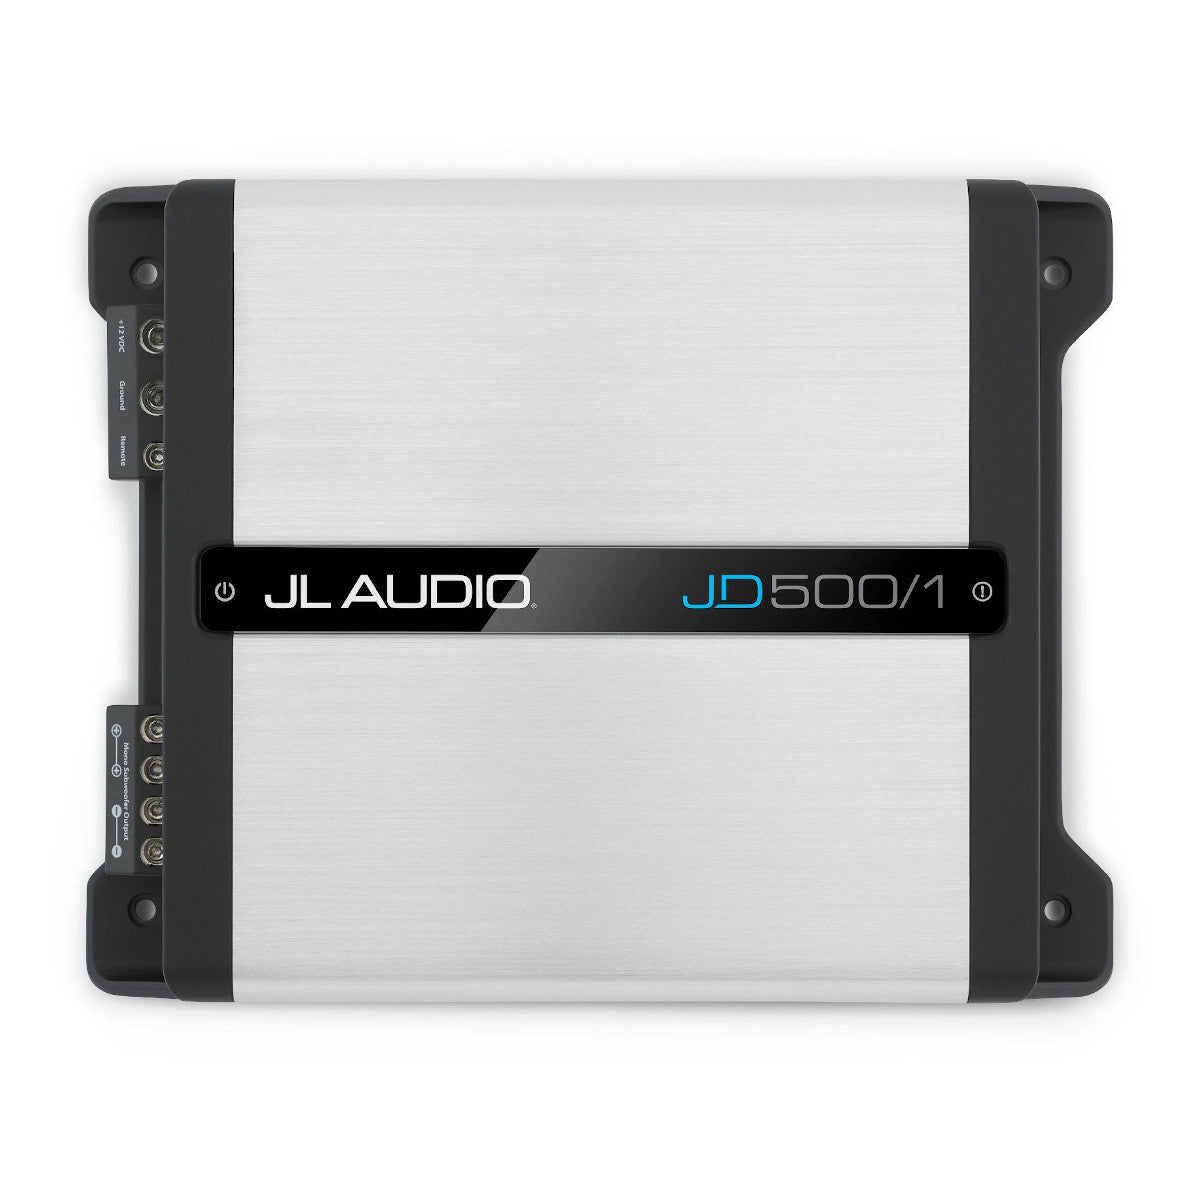 JL Audio JD500/1 Class D Monoblock Amplifier - 500 Watts @ 2 Ohms